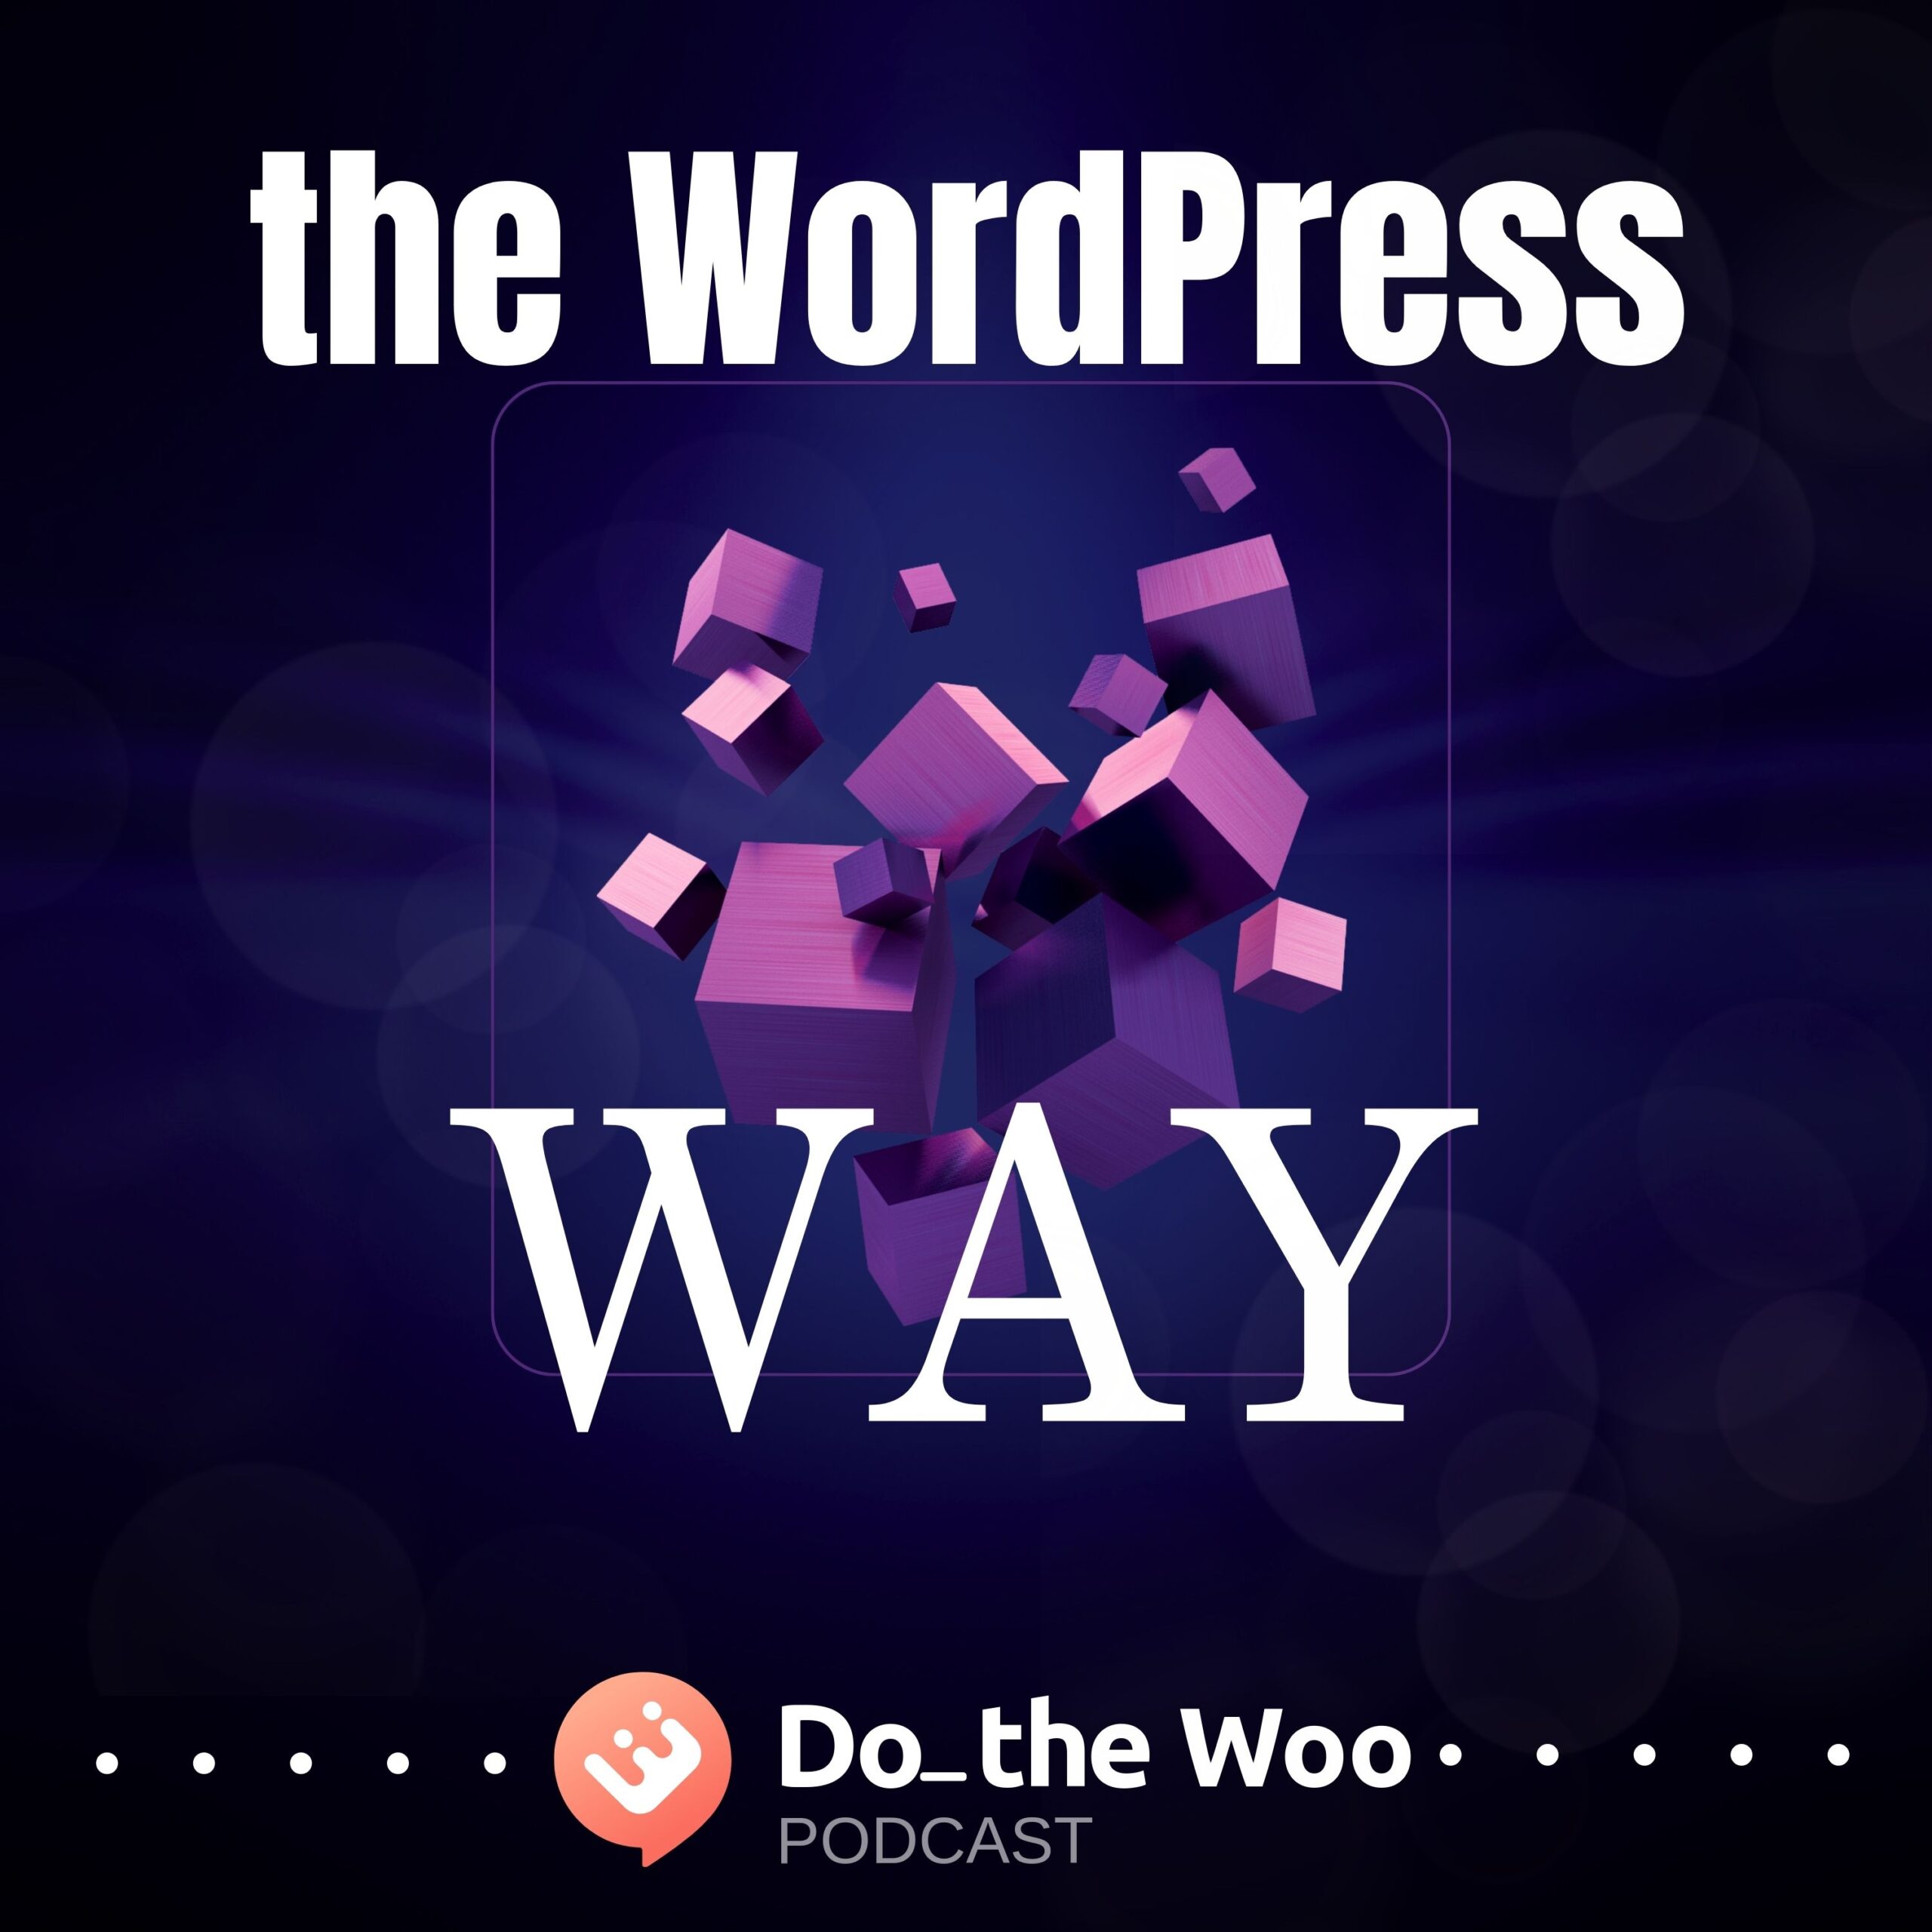 The WordPress Way